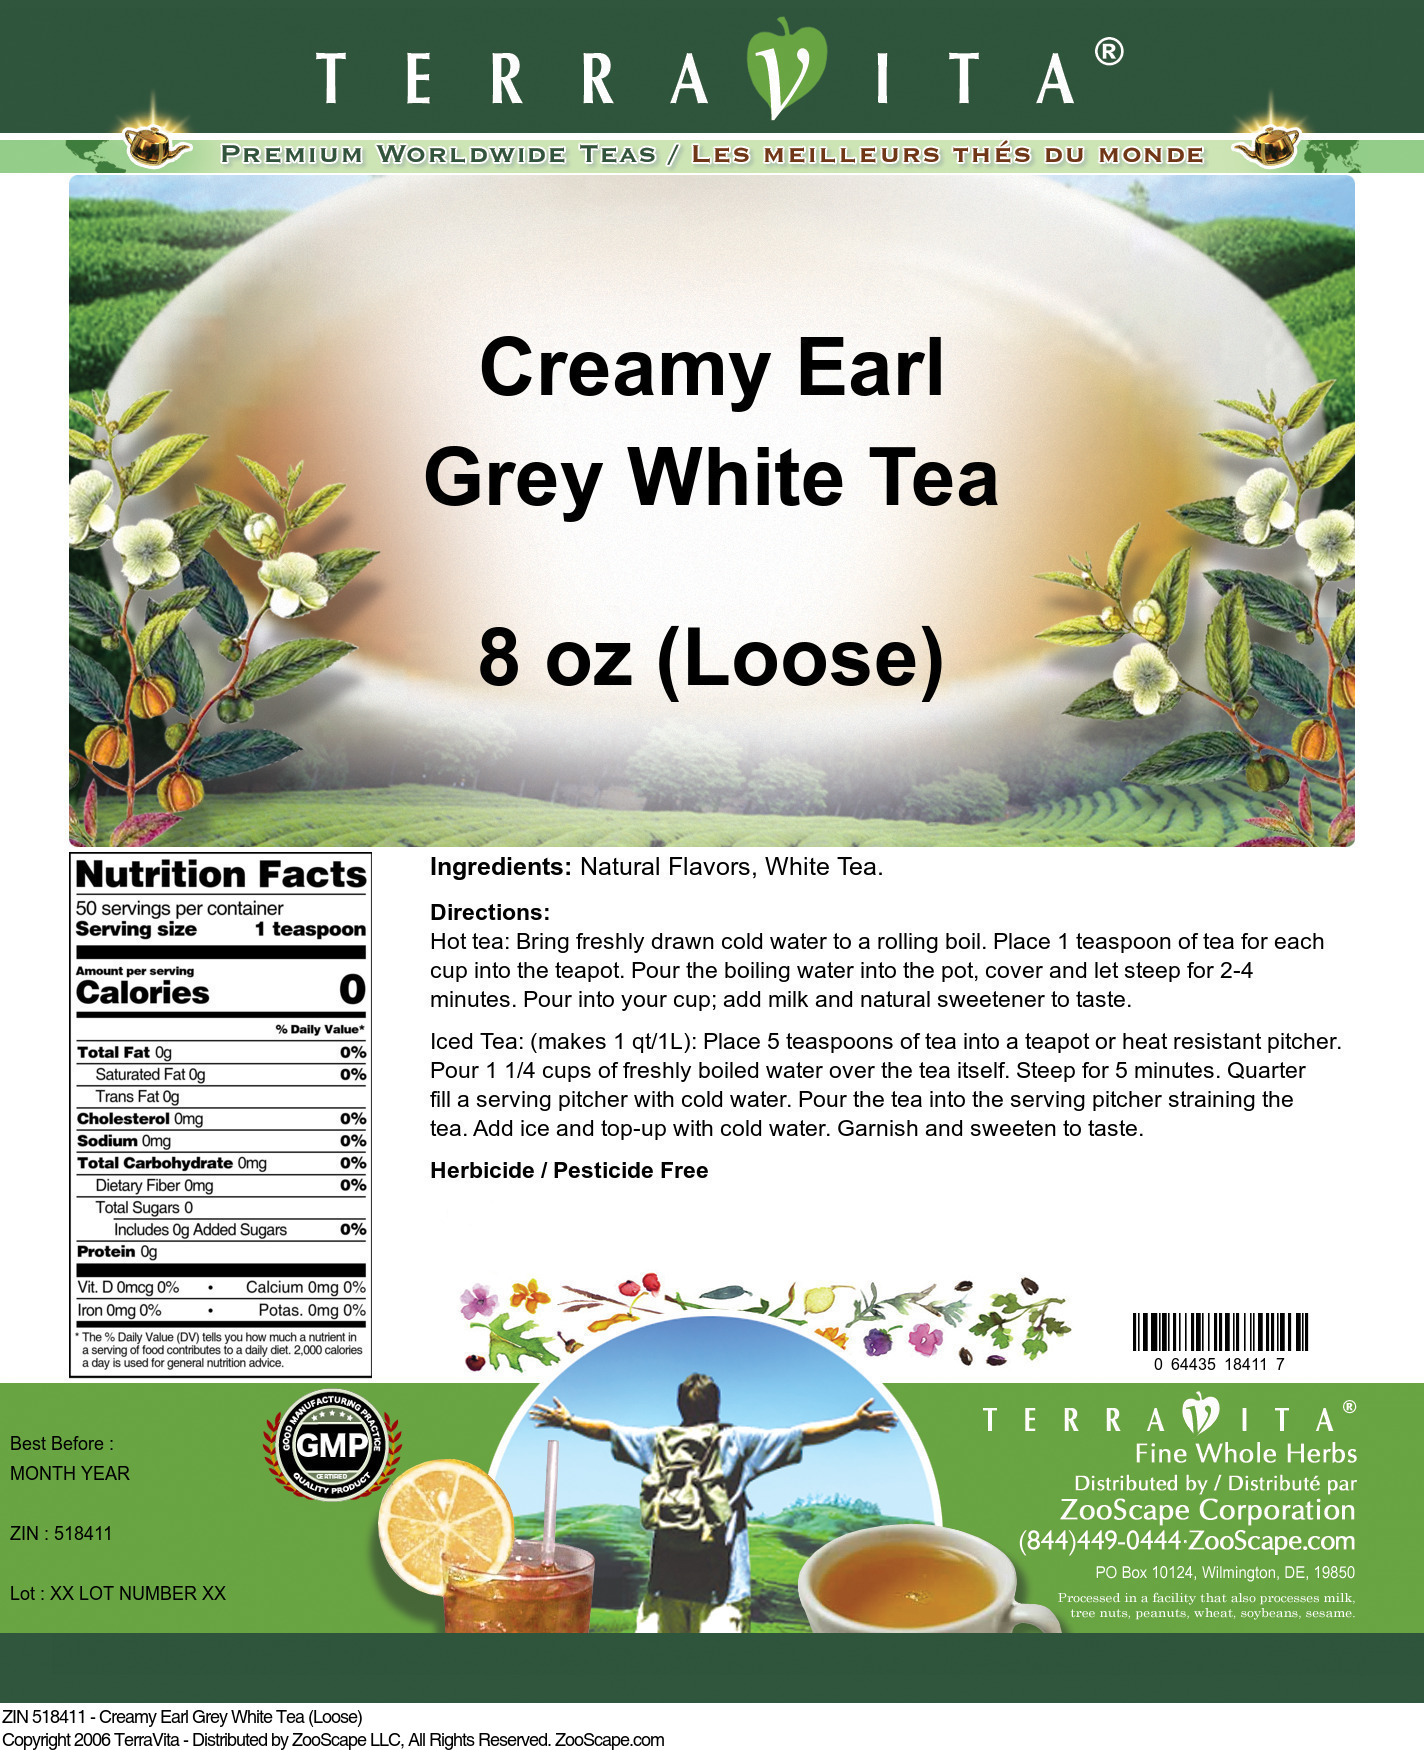 Creamy Earl Grey White Tea (Loose) - Label